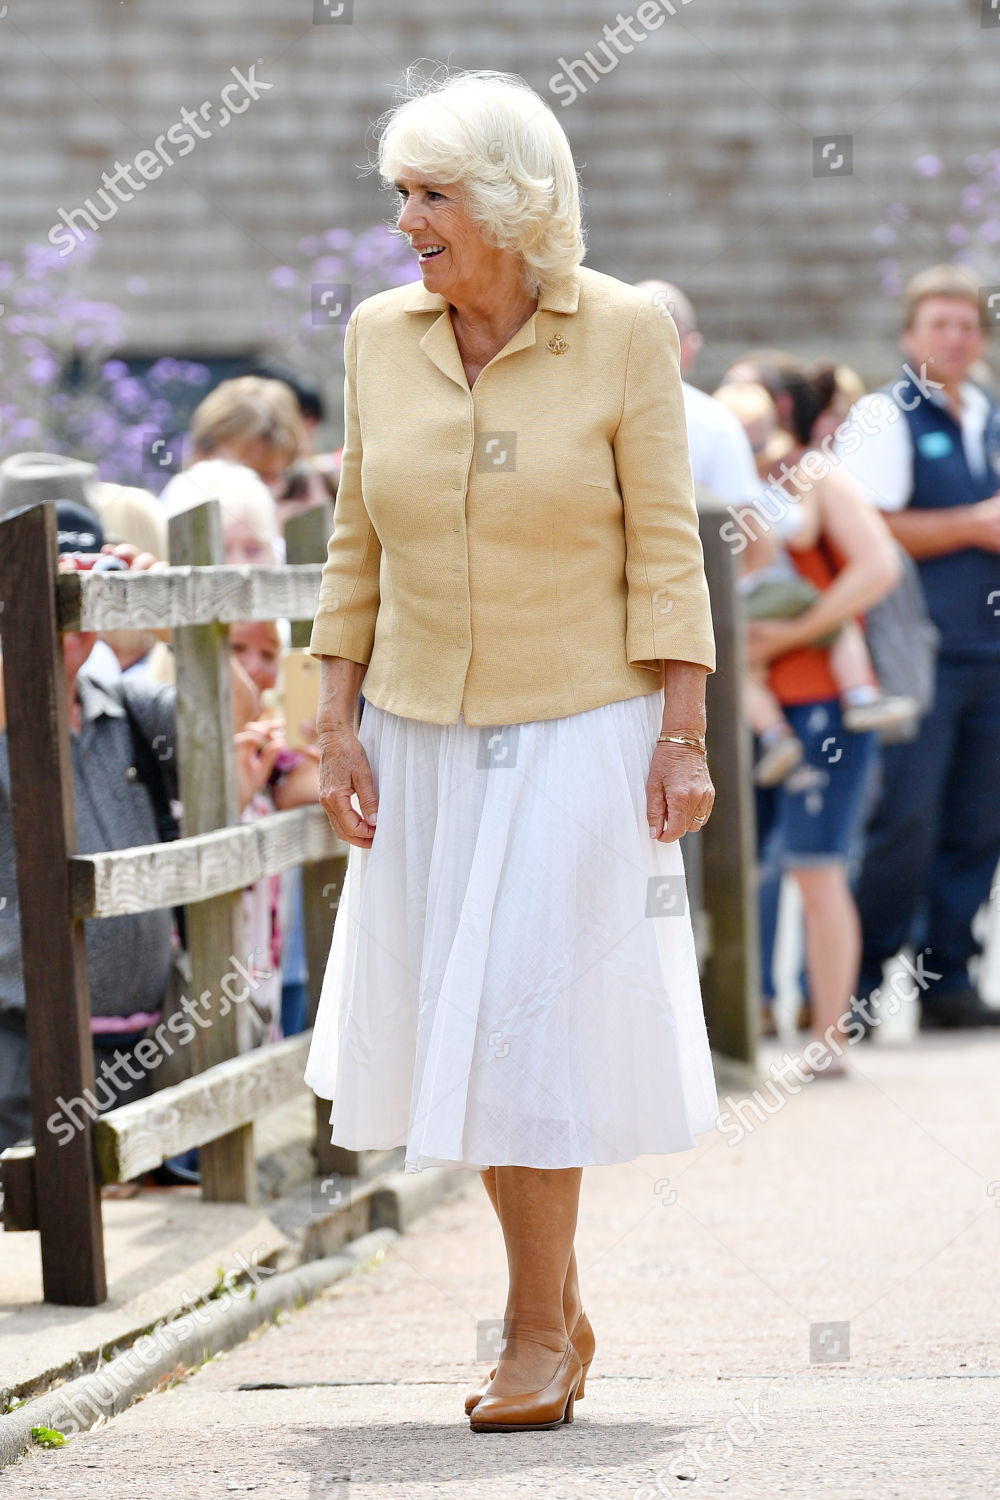 royal-visit-to-devon-uk-shutterstock-editorial-10338529w.jpg